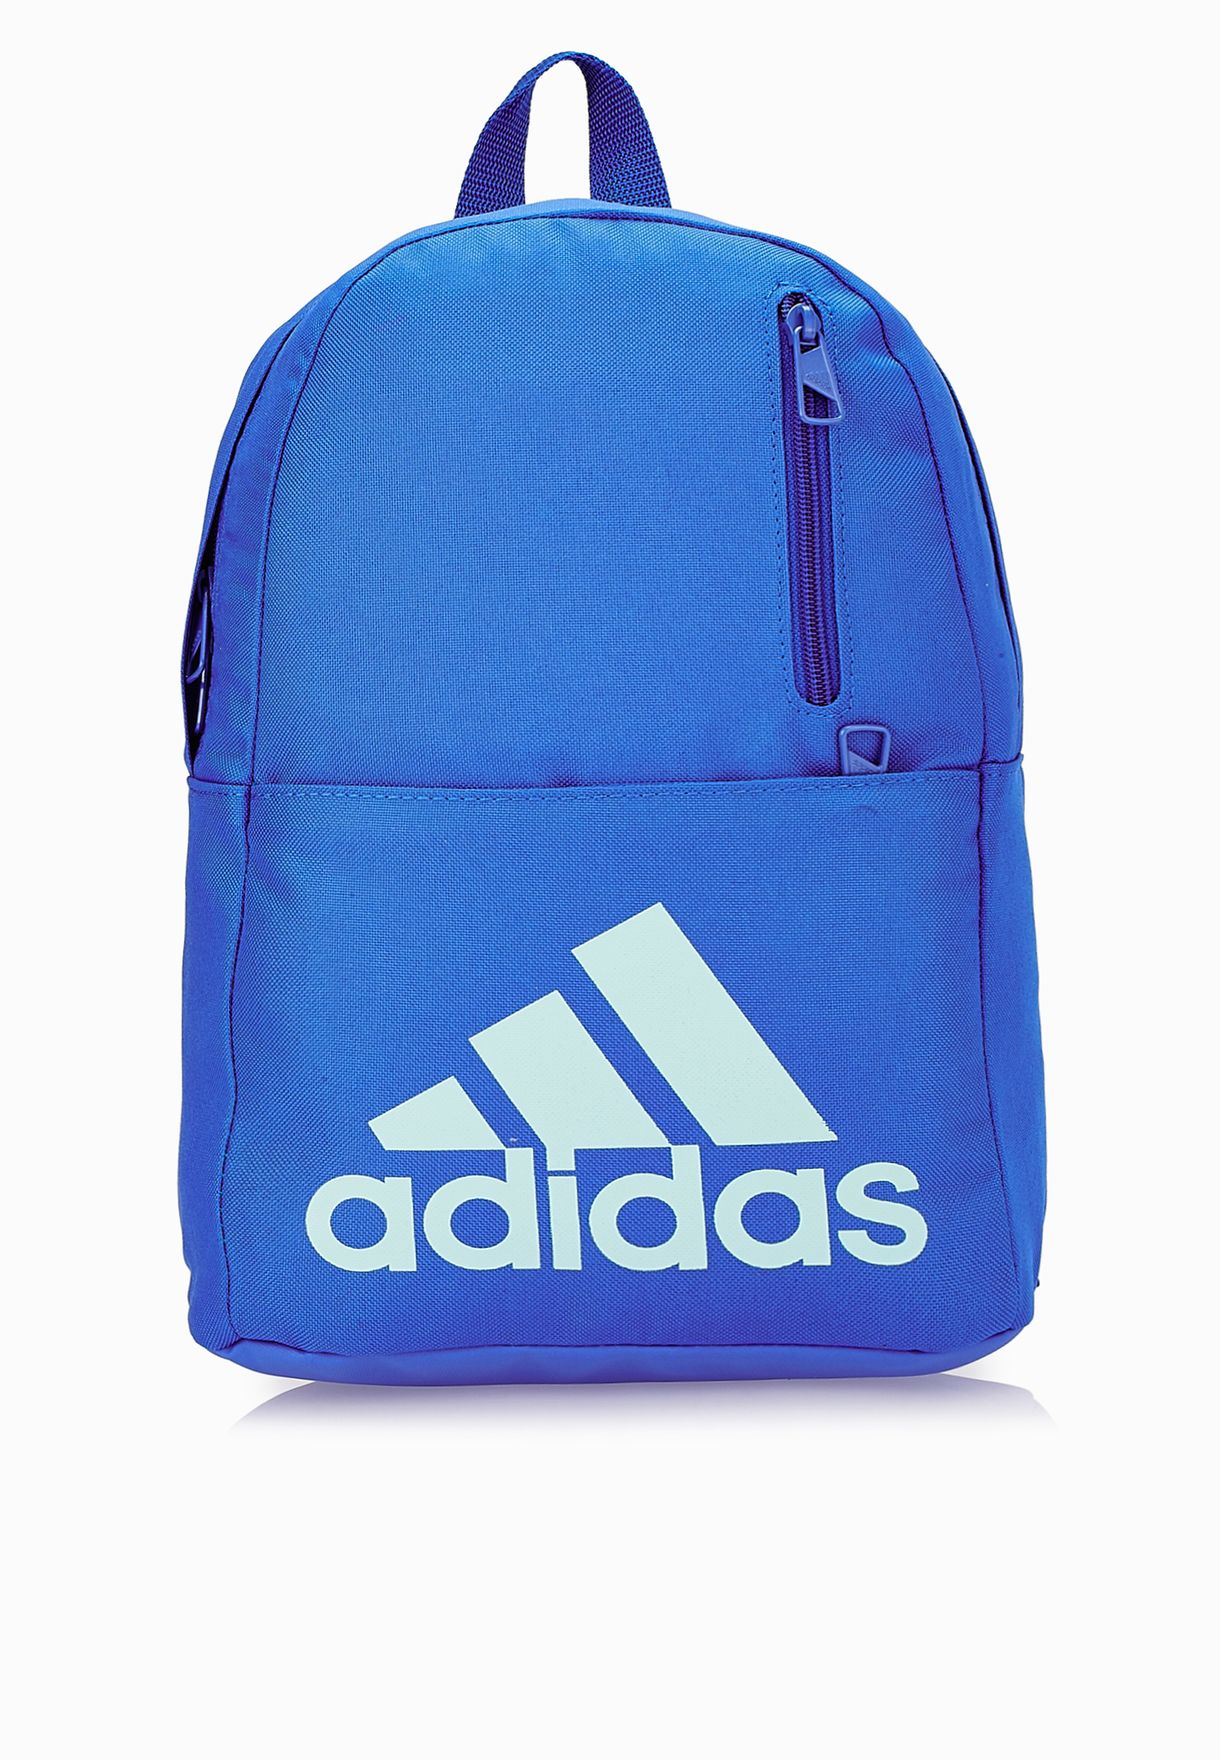 adidas versatile backpack